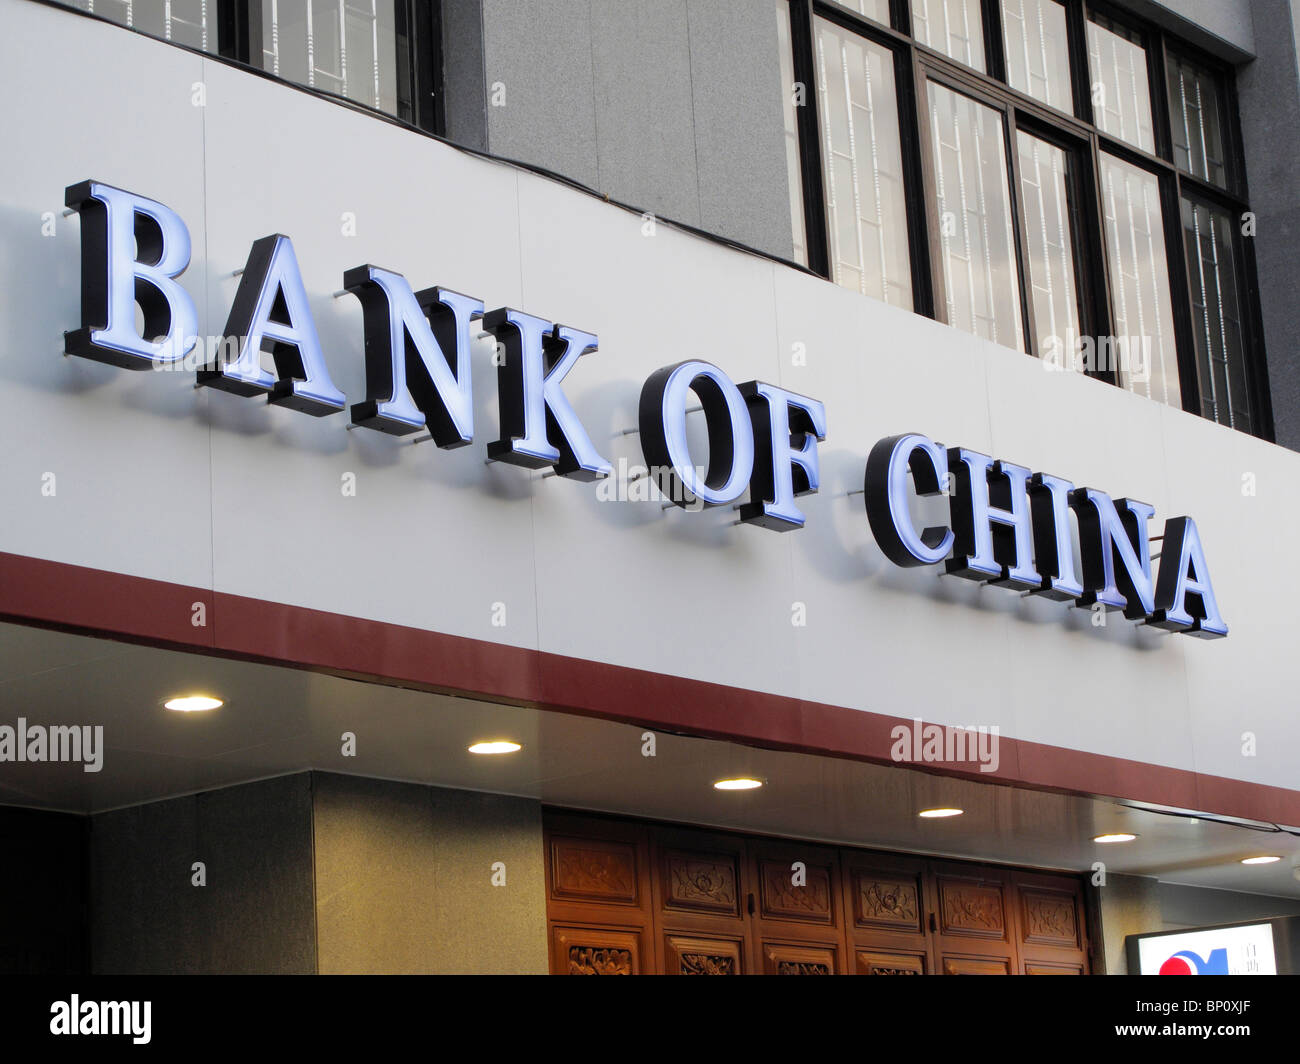 China, bank of China Stock Photo